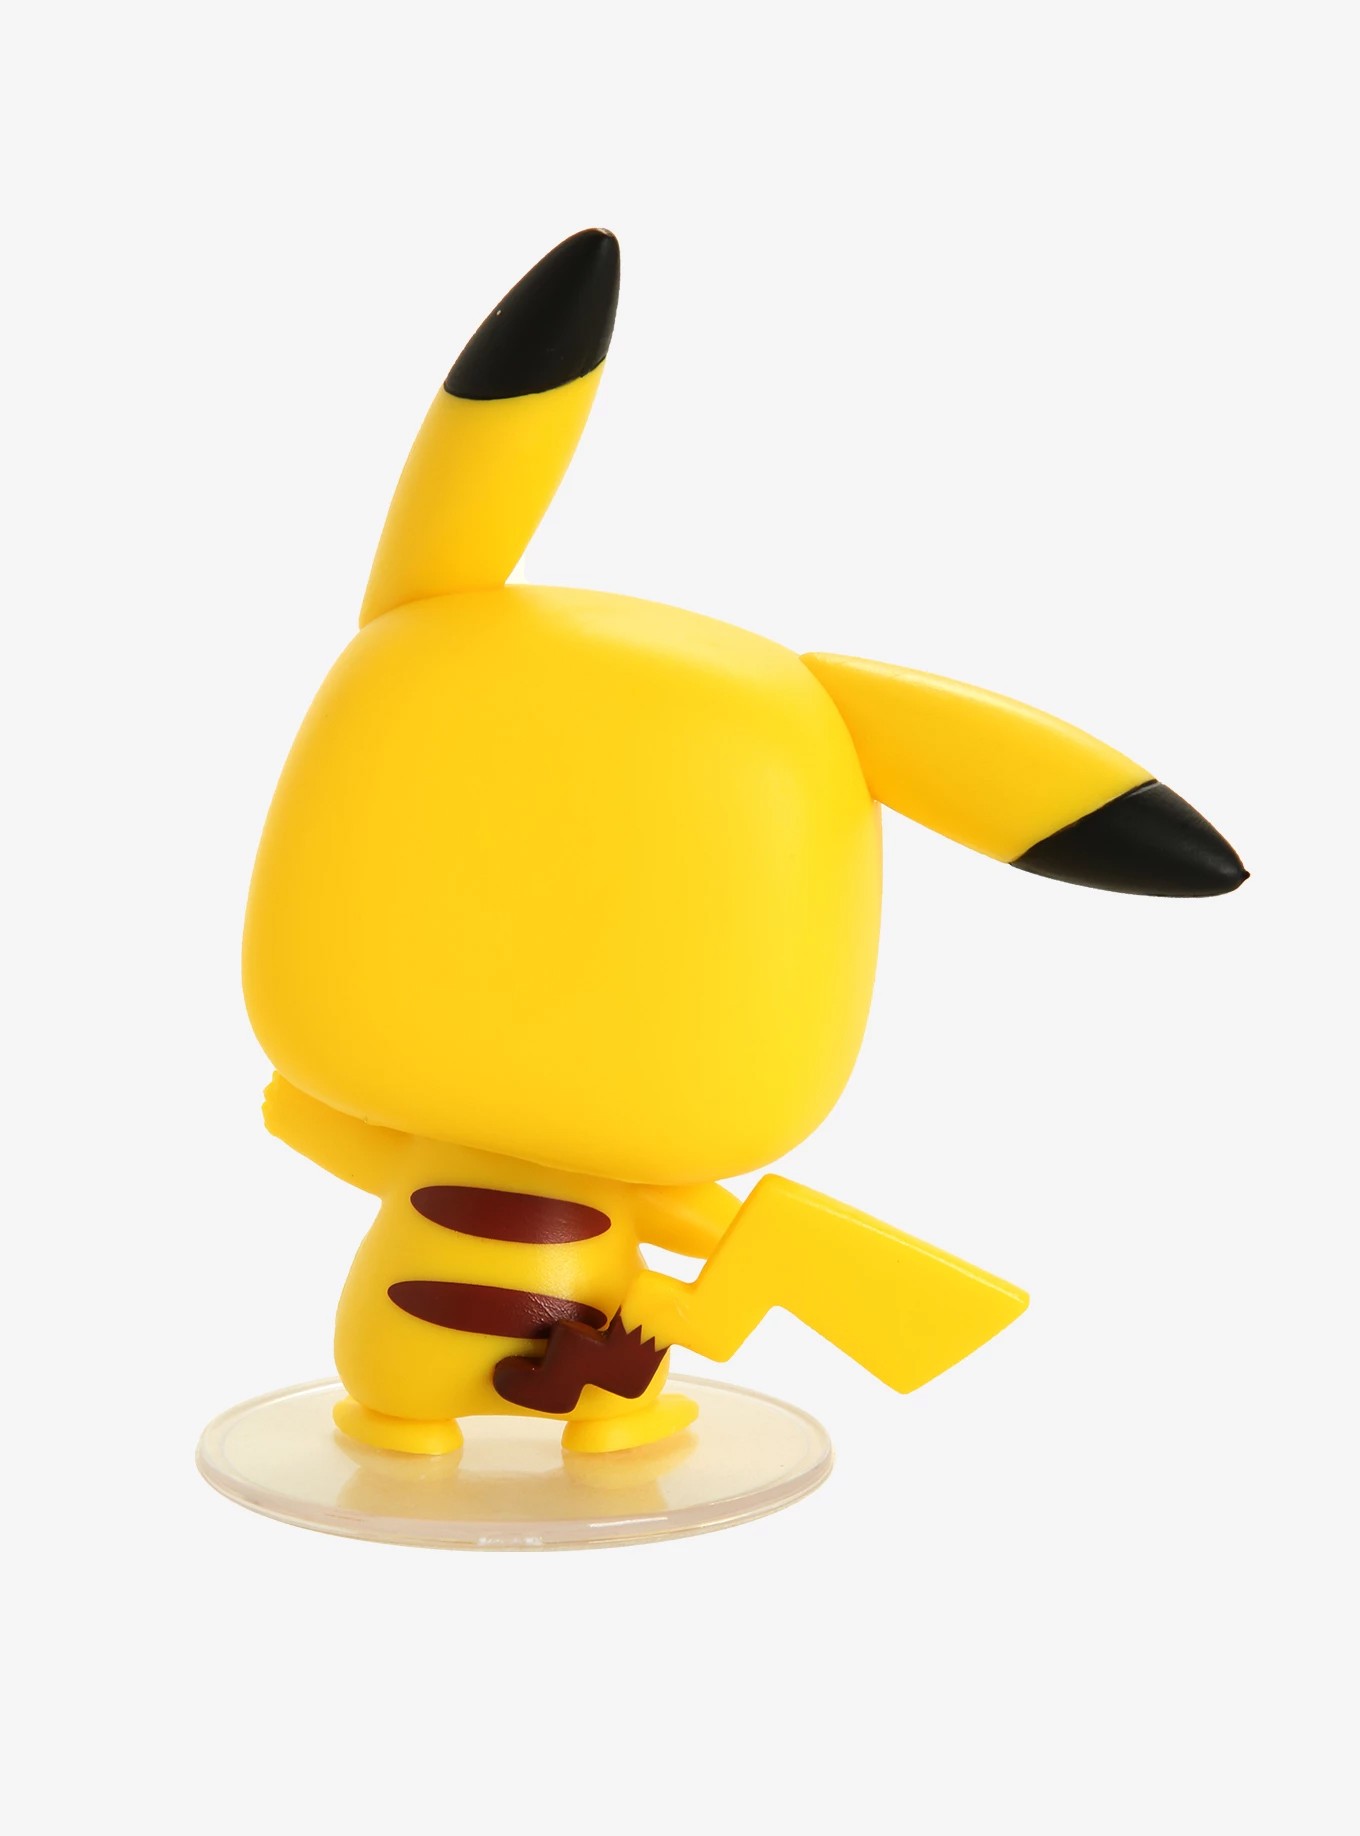 Pikachu #553 - Pokémon - Funko Pop! Games